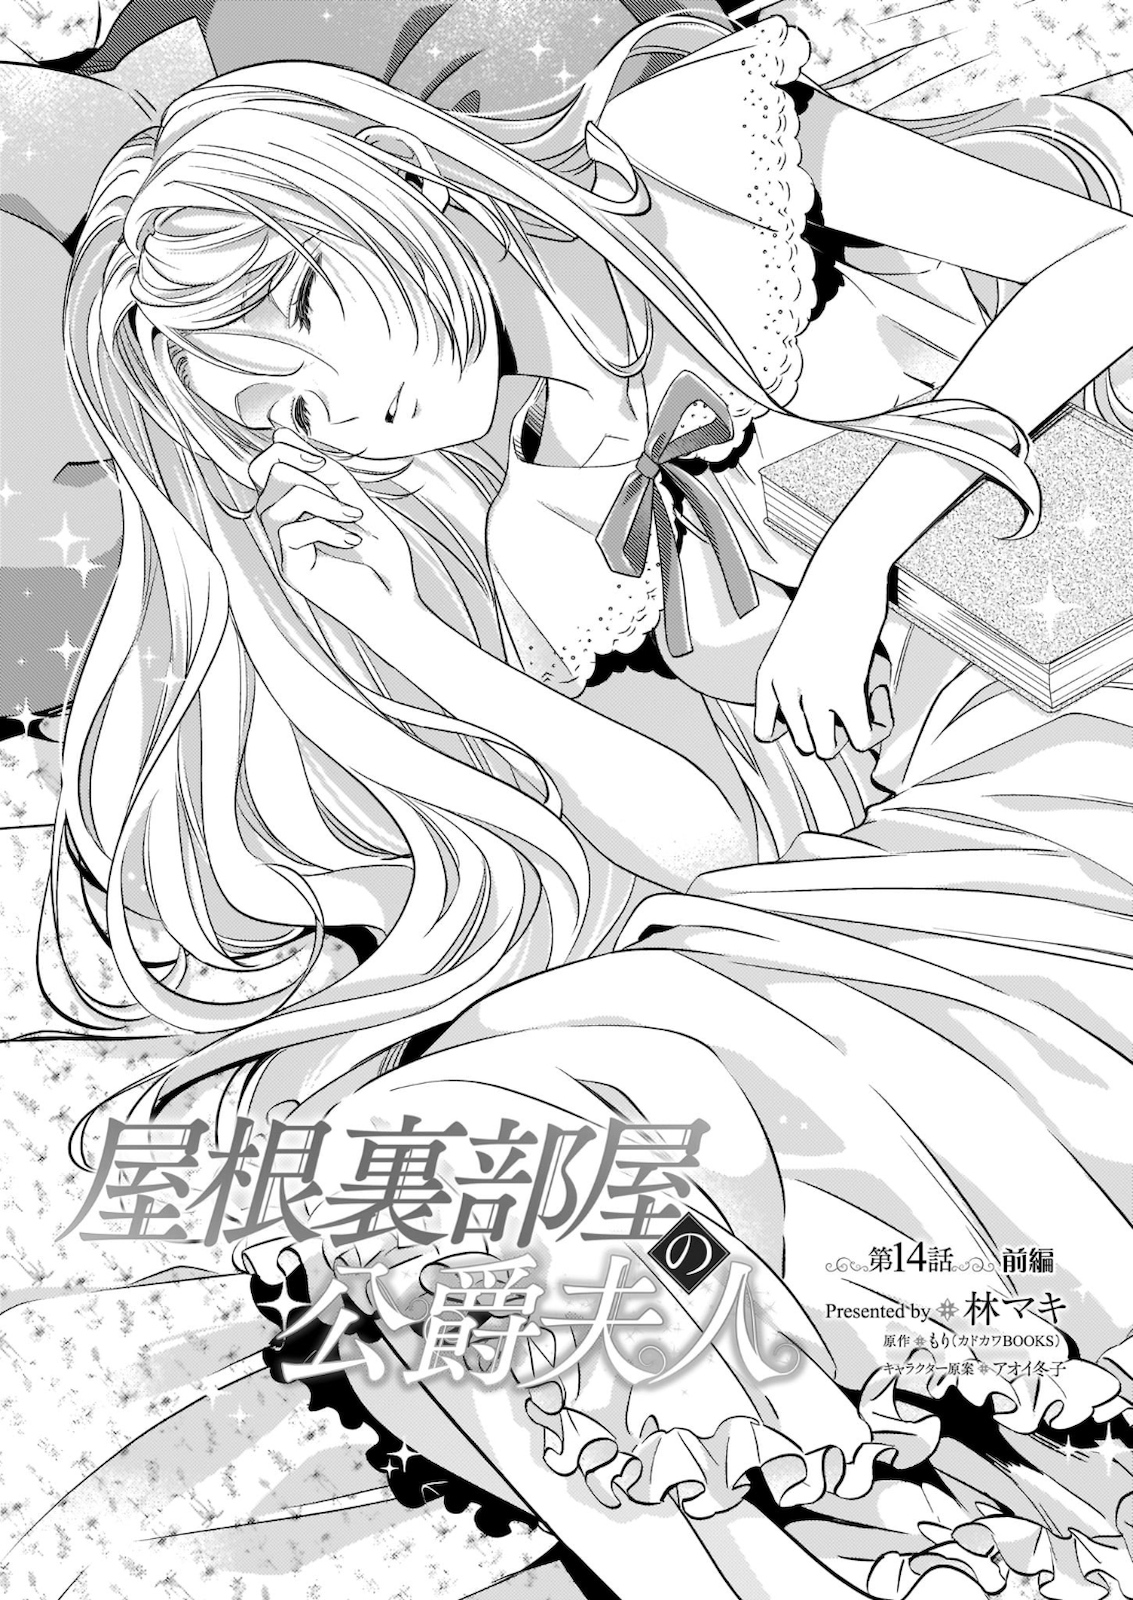 Yane Urabeya no Koushaku Fujin - Chapter 14.1 - Page 1